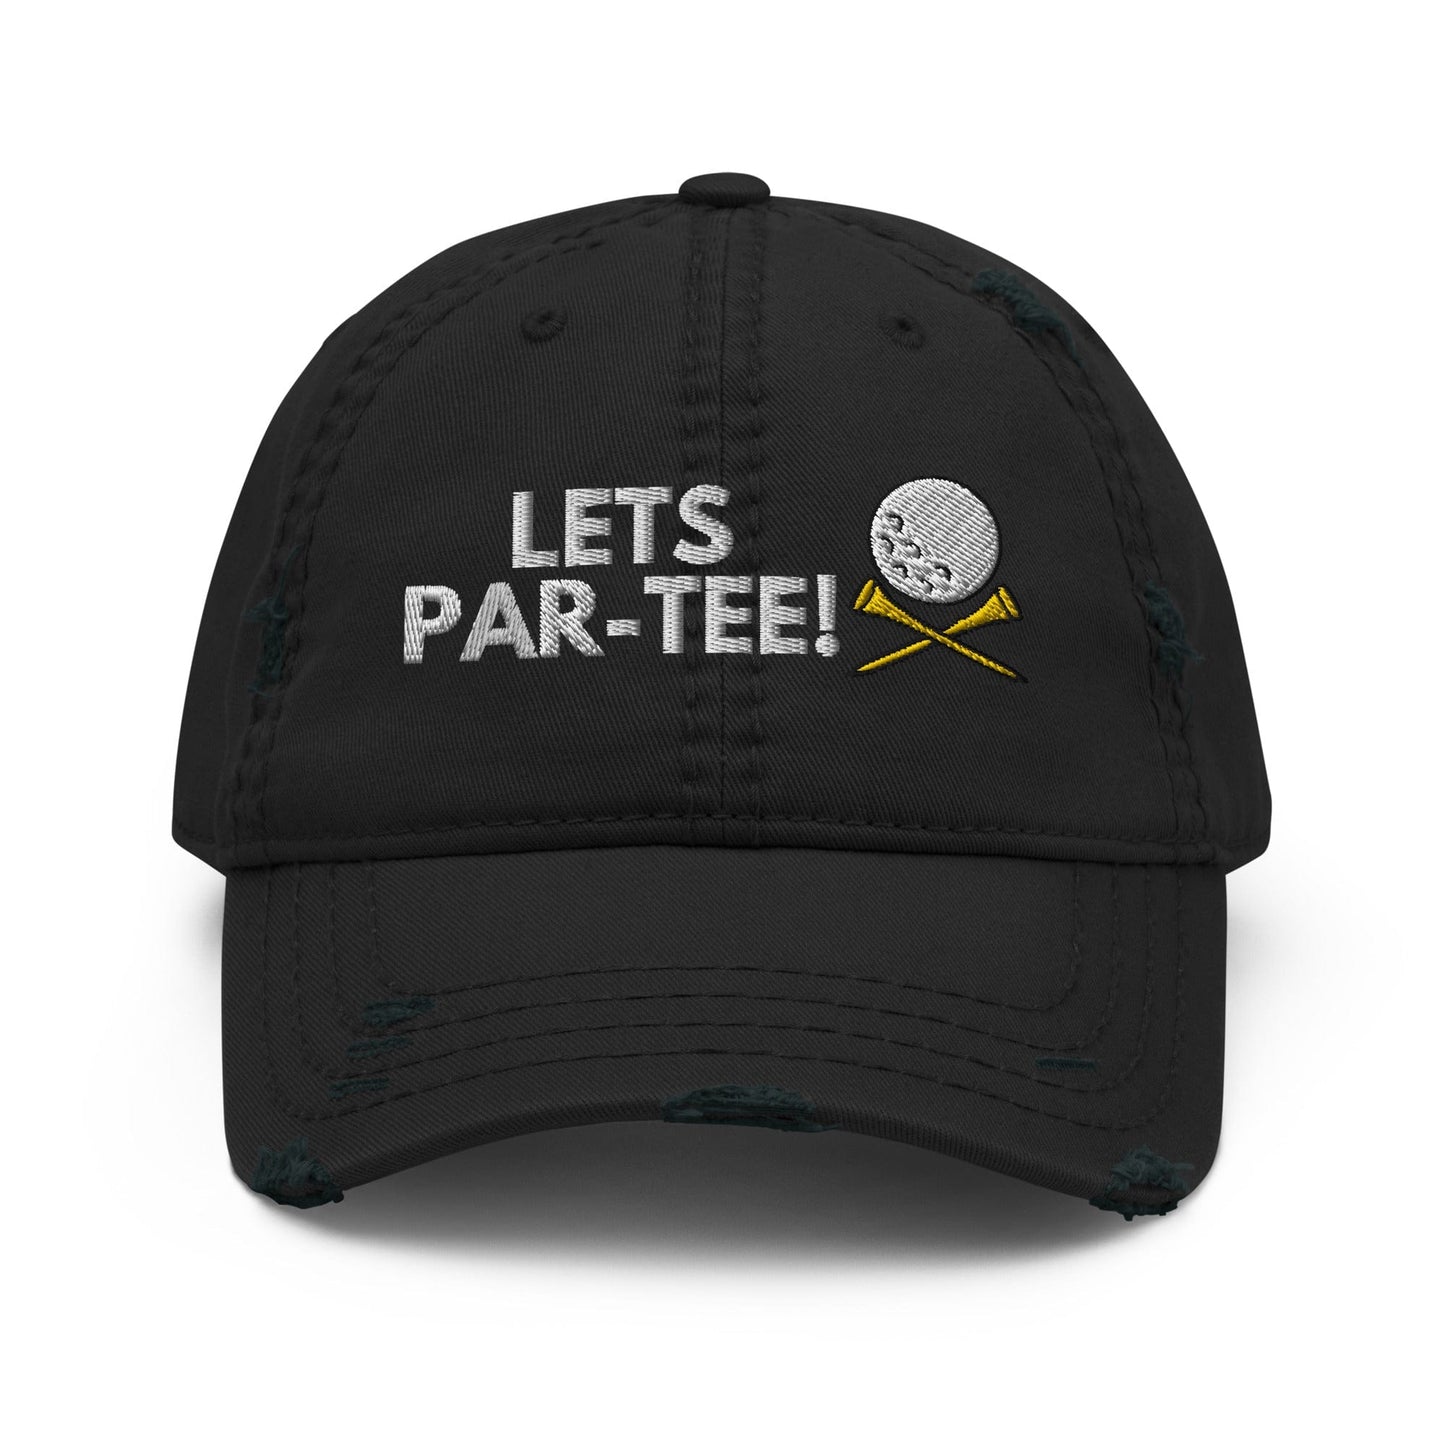 Funny Golfer Gifts  Distressed Cap Black Lets Par-Tee Hat Distressed Hat